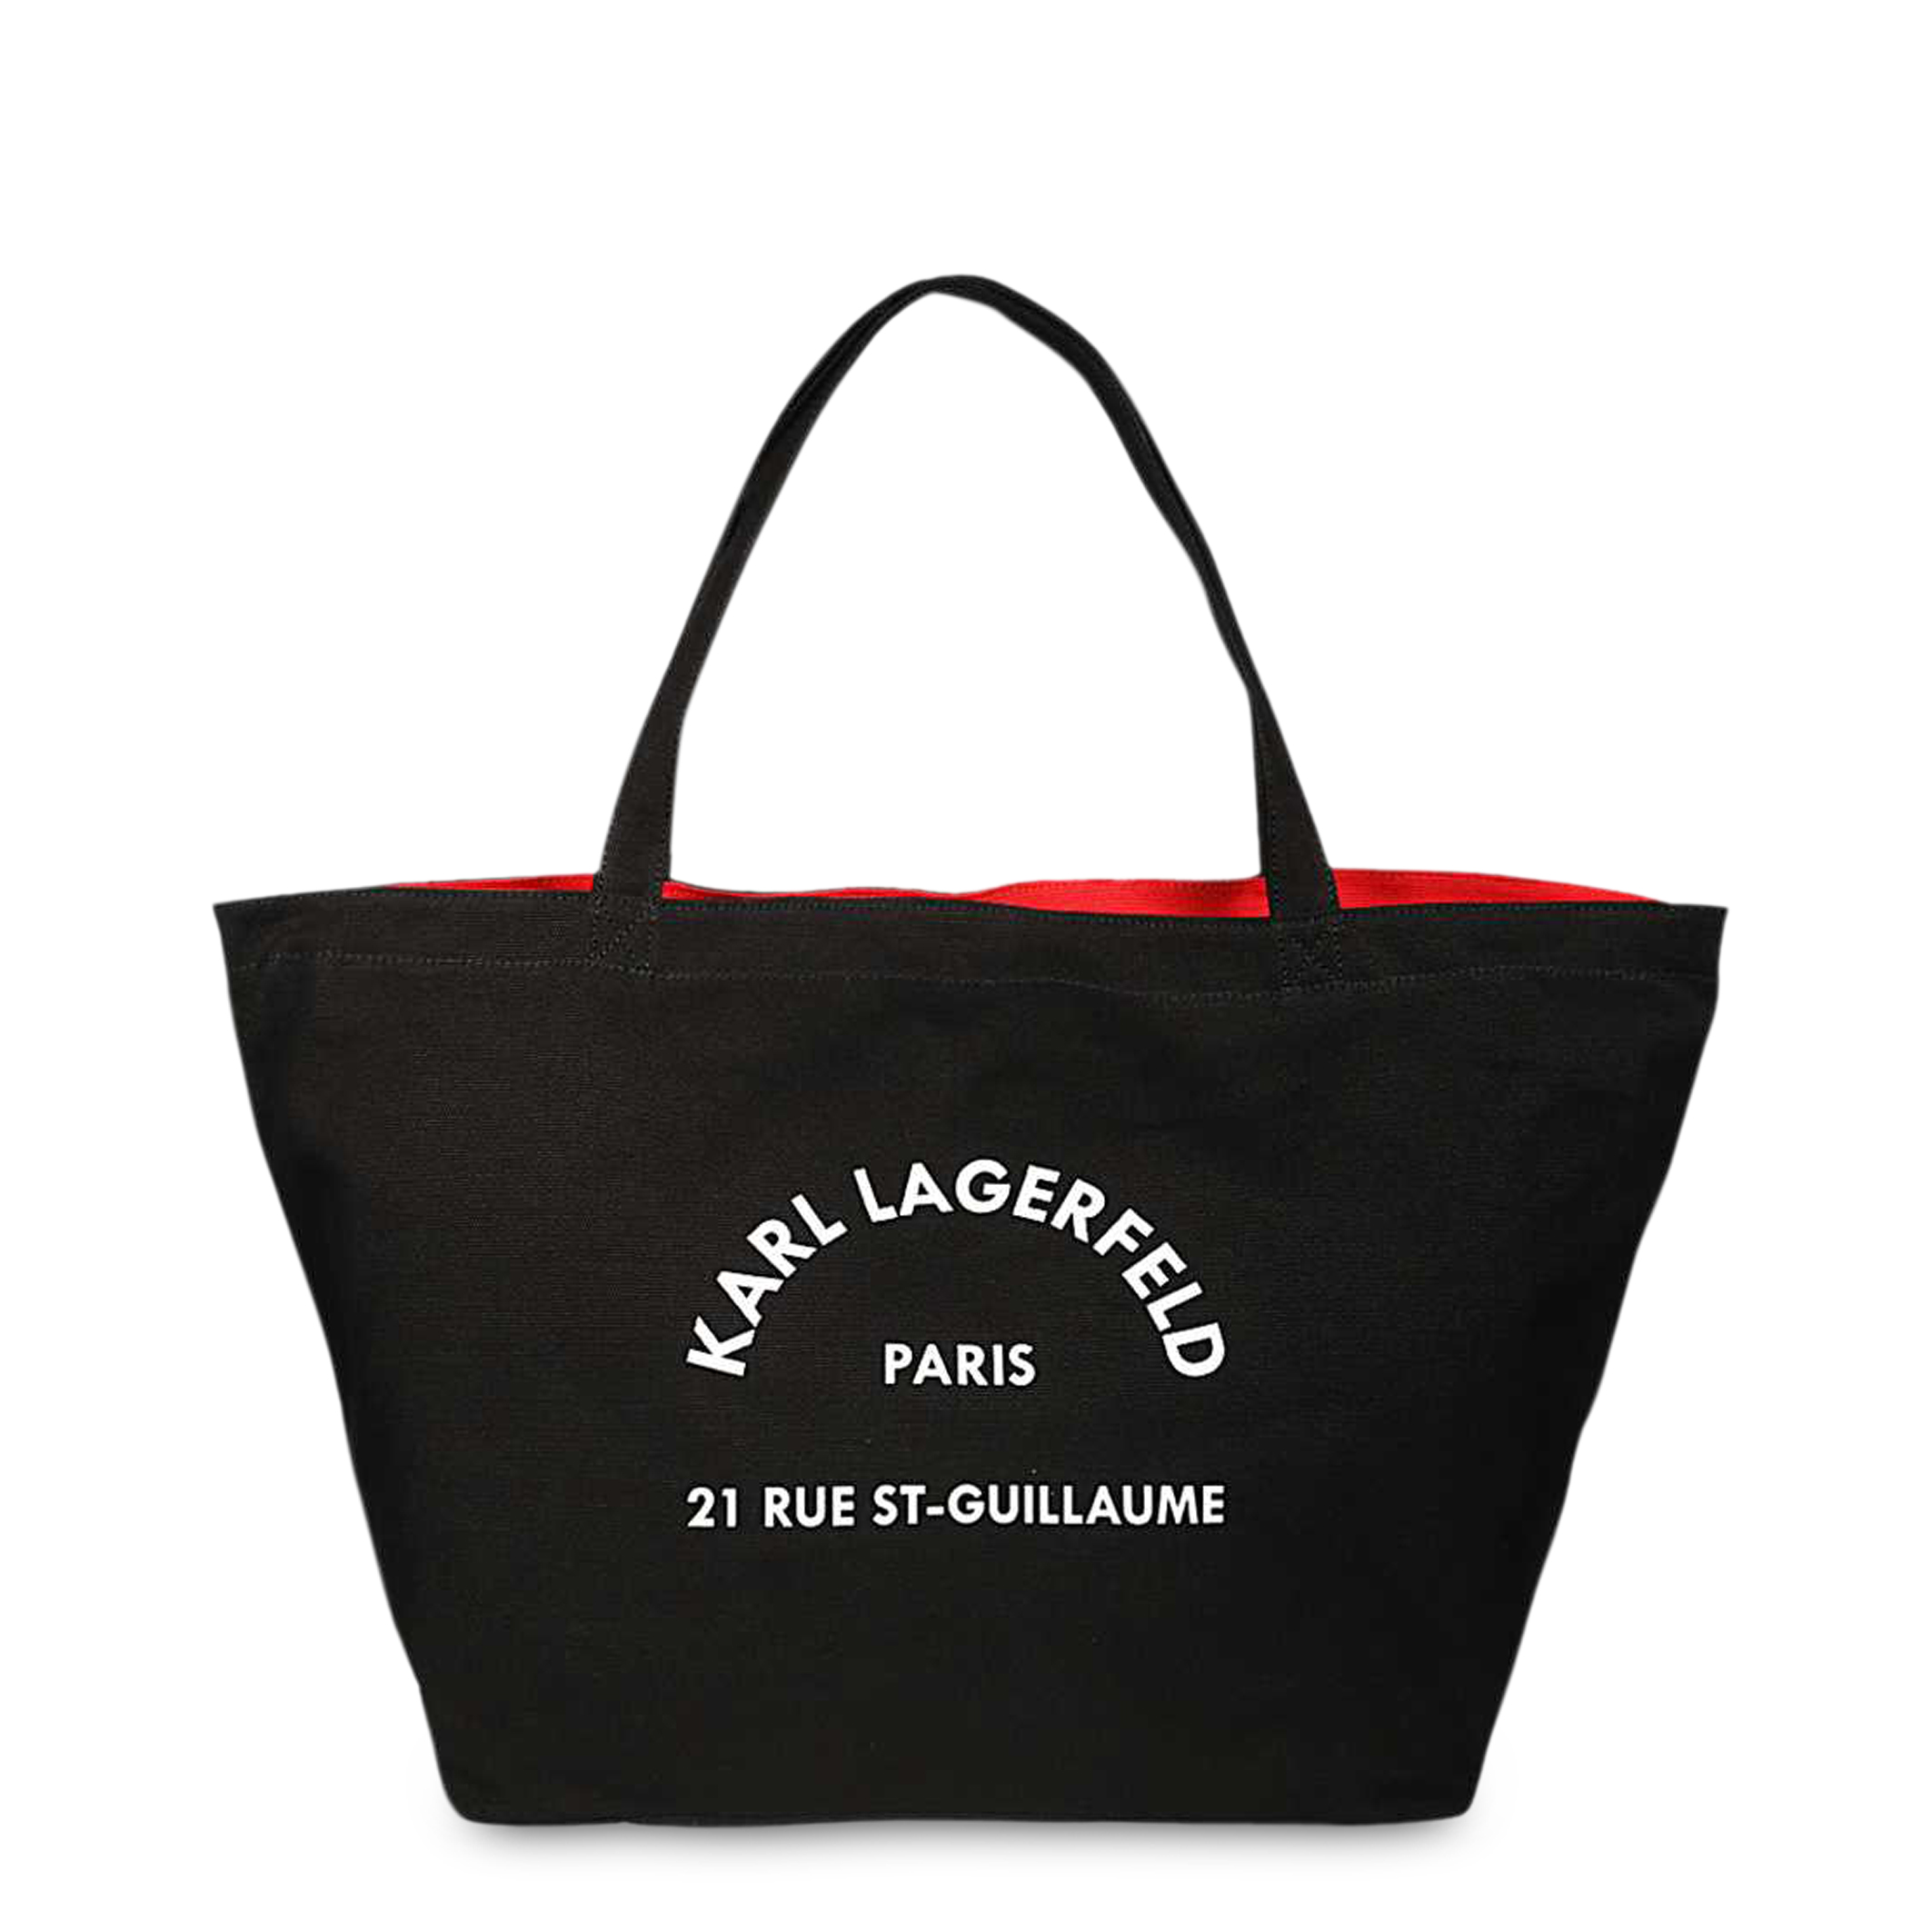 Karl Lagerfeld Black Shopping bags for Women - 201W3138